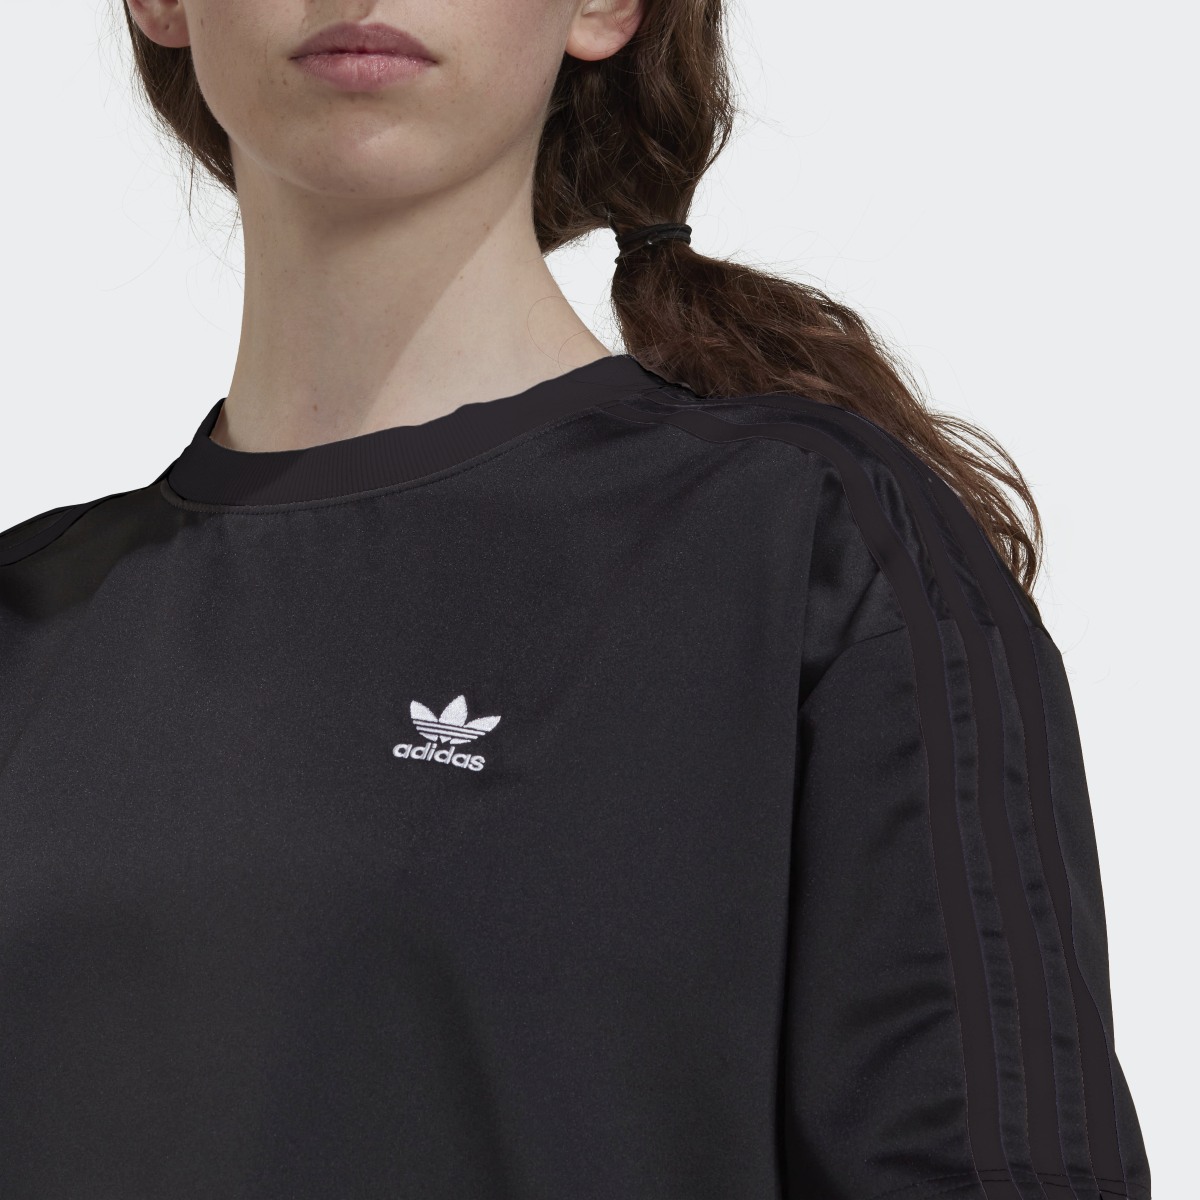 Adidas Always Original Laced T-Shirt-Kleid. 6